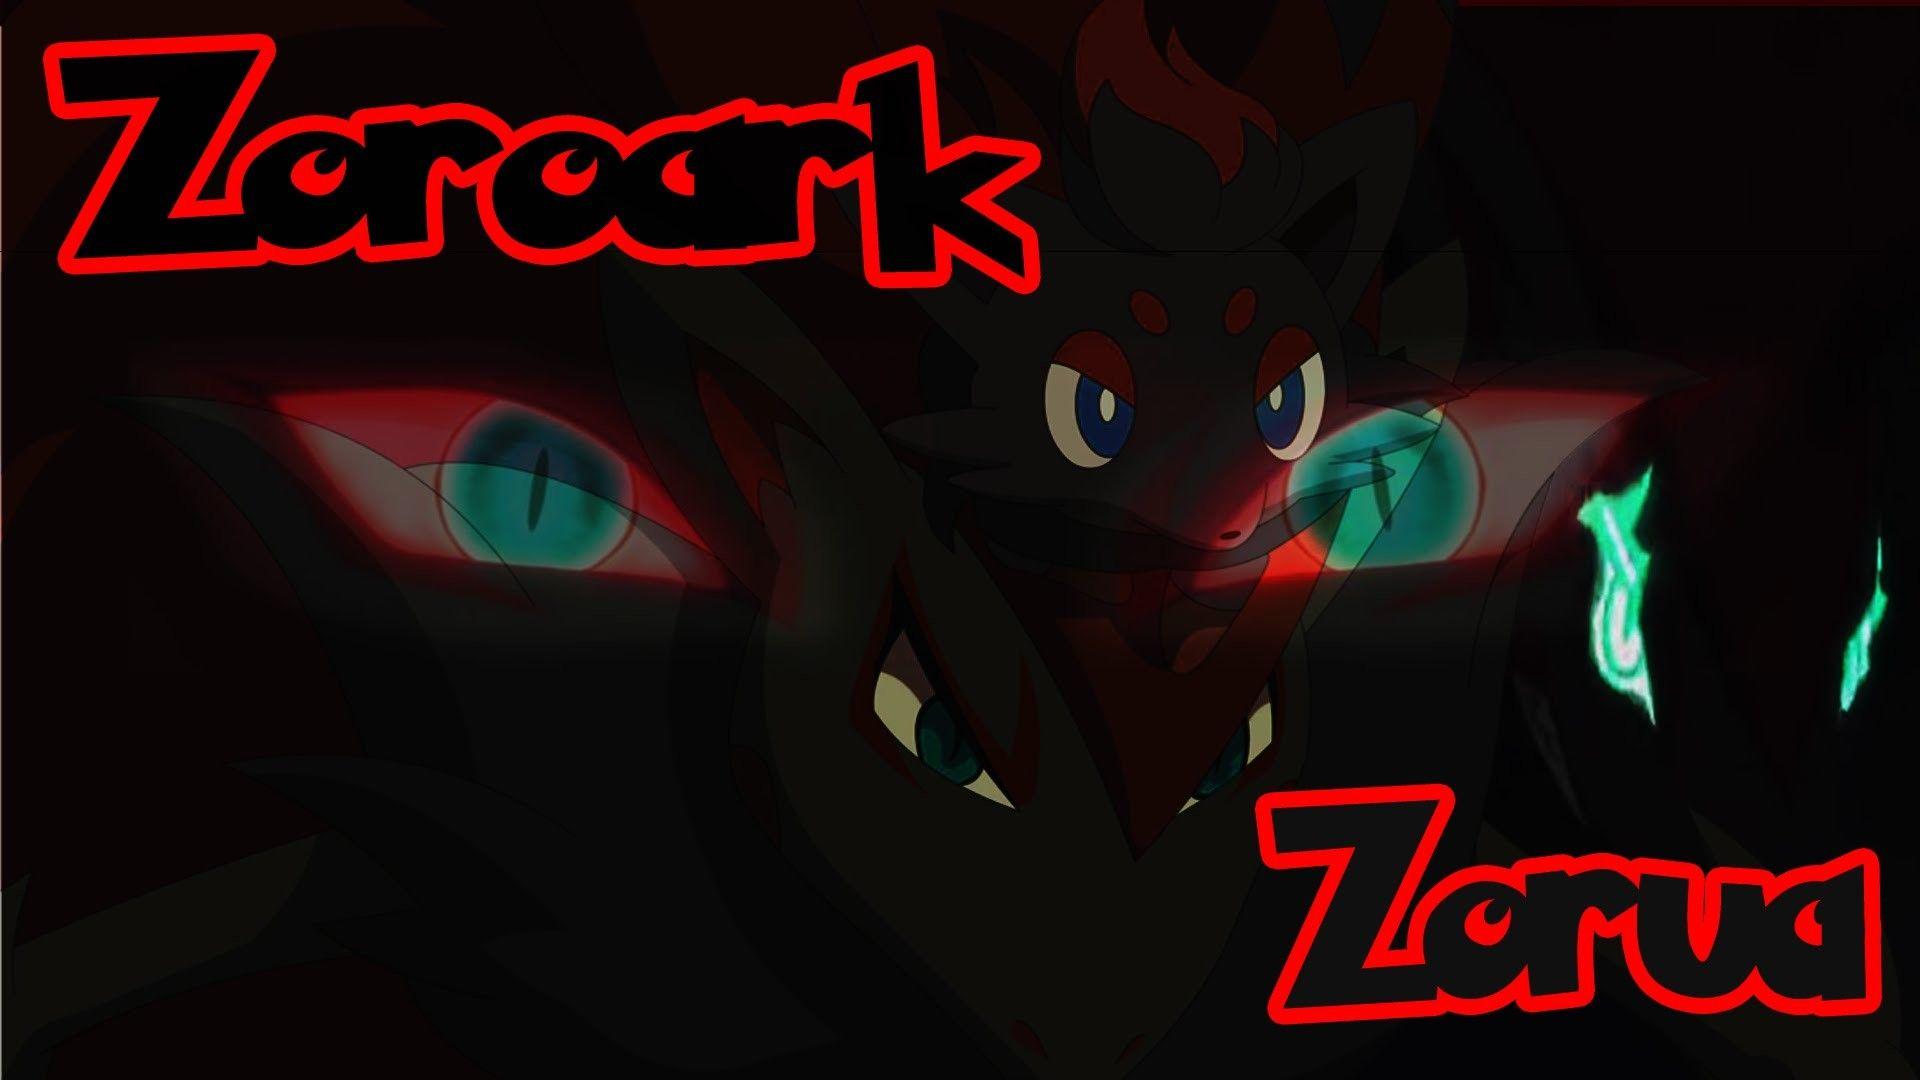 Amazing Zoroark Image HD Wallpaper. Beautiful image HD Picture